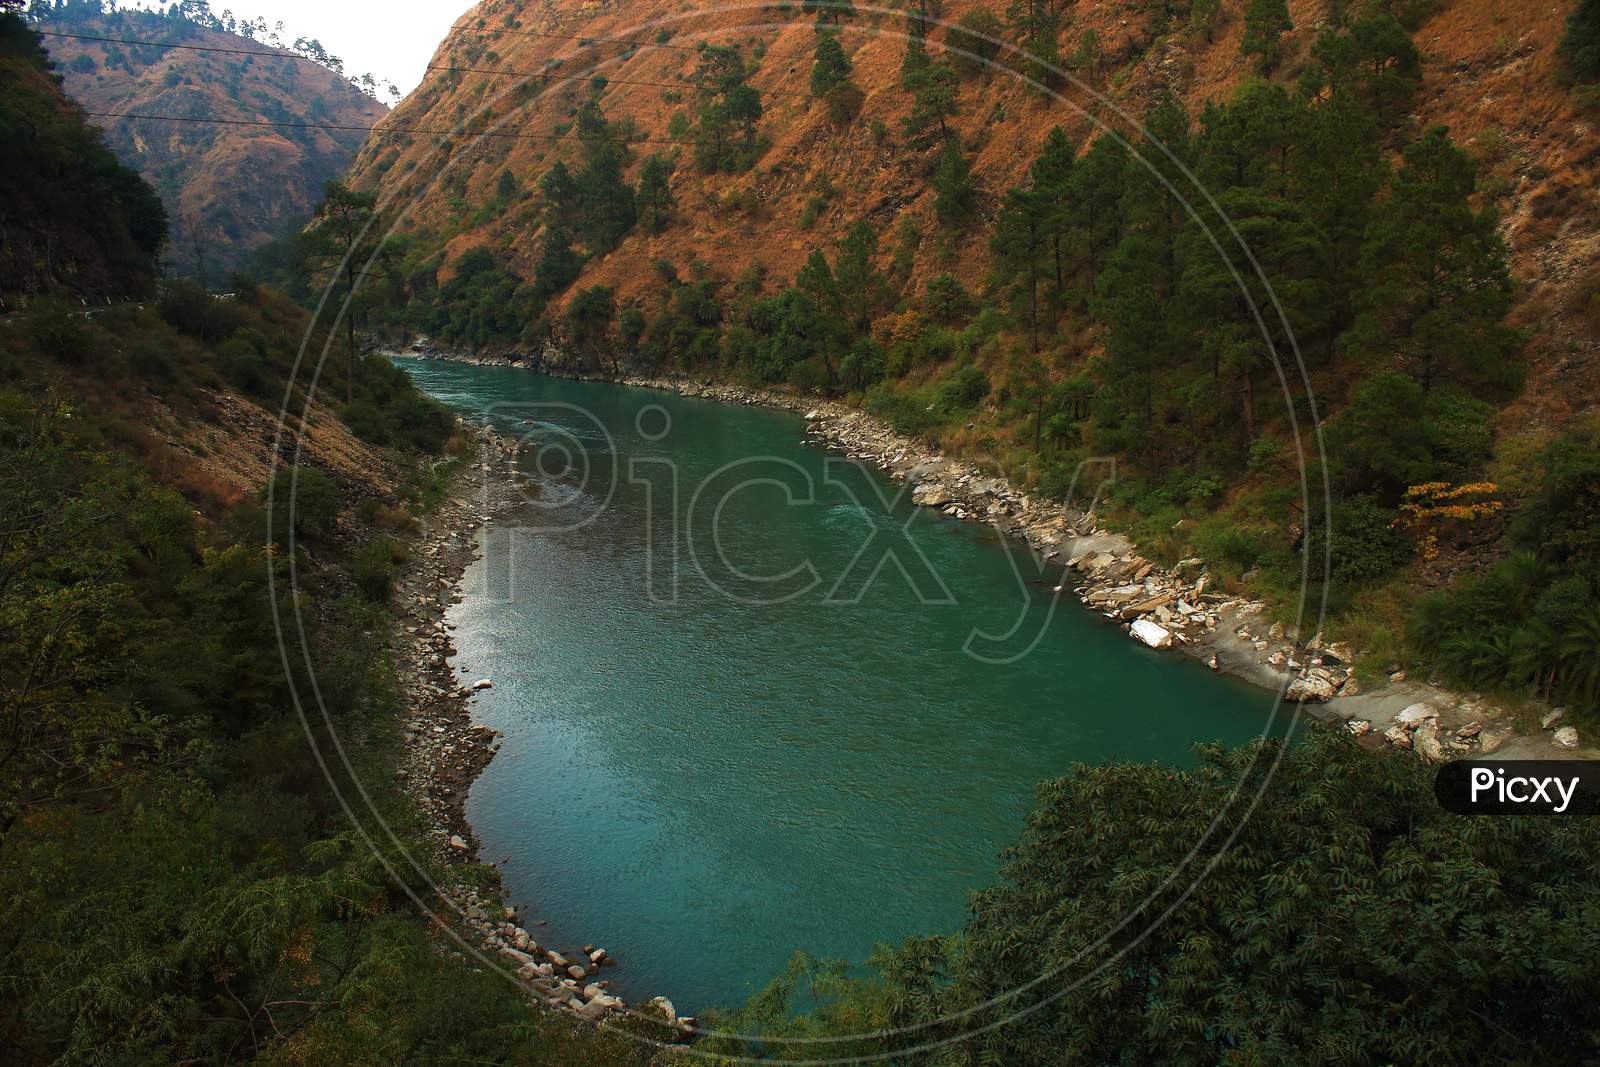 Vyas river flowing aqua color water, from Himalaya vally,